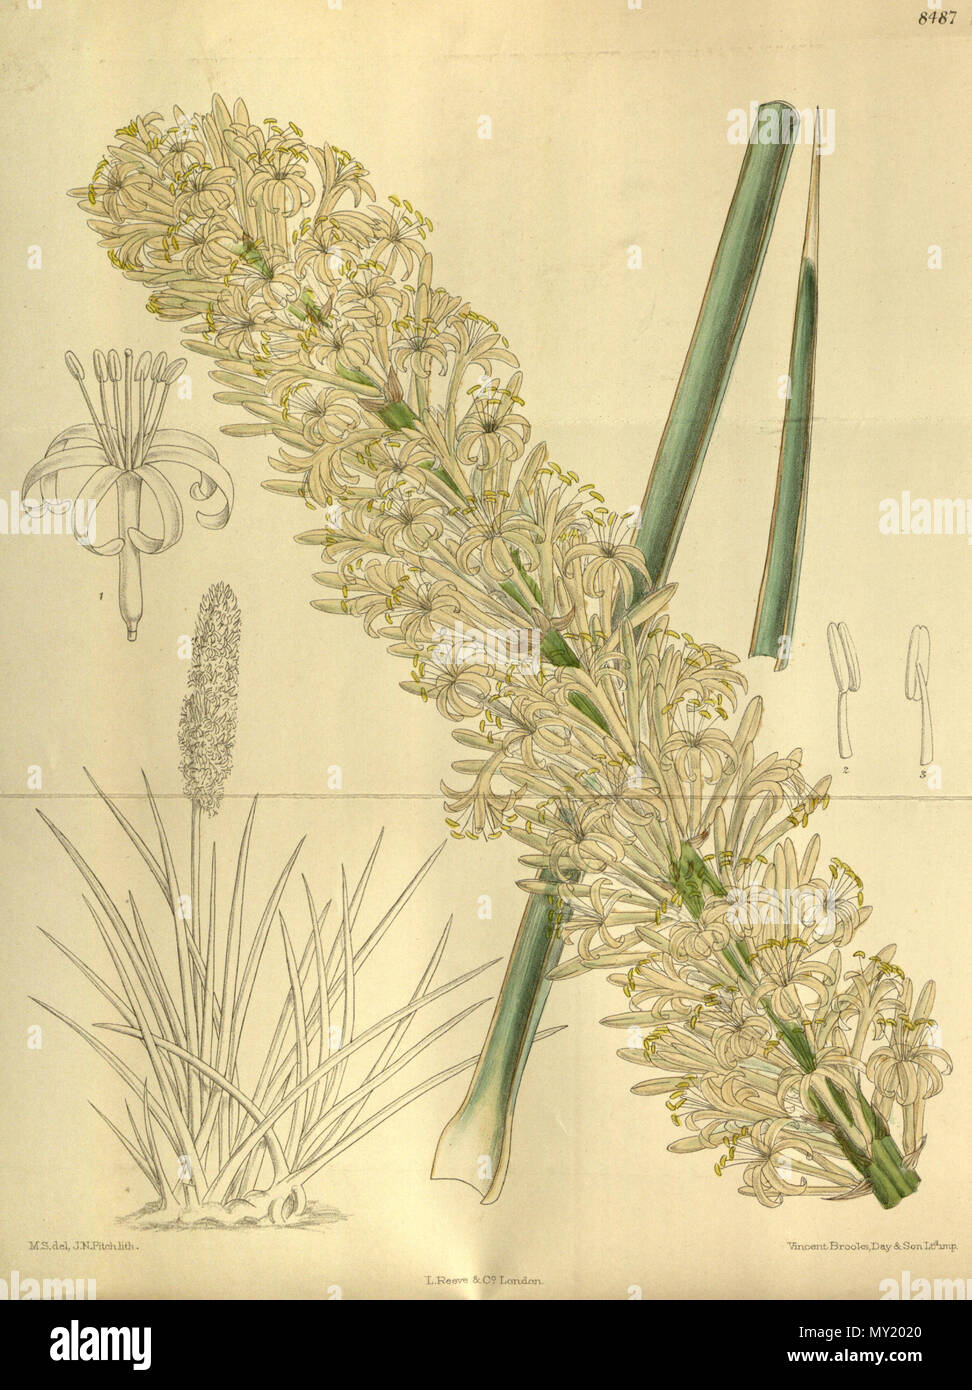 . Sansevieria aethiopica, Asparagaceae, Nolinoideae . 1913. M.S. del, J.N.Fitch, lith. 474 Sansevieria aethiopica 139-8487 Stock Photo